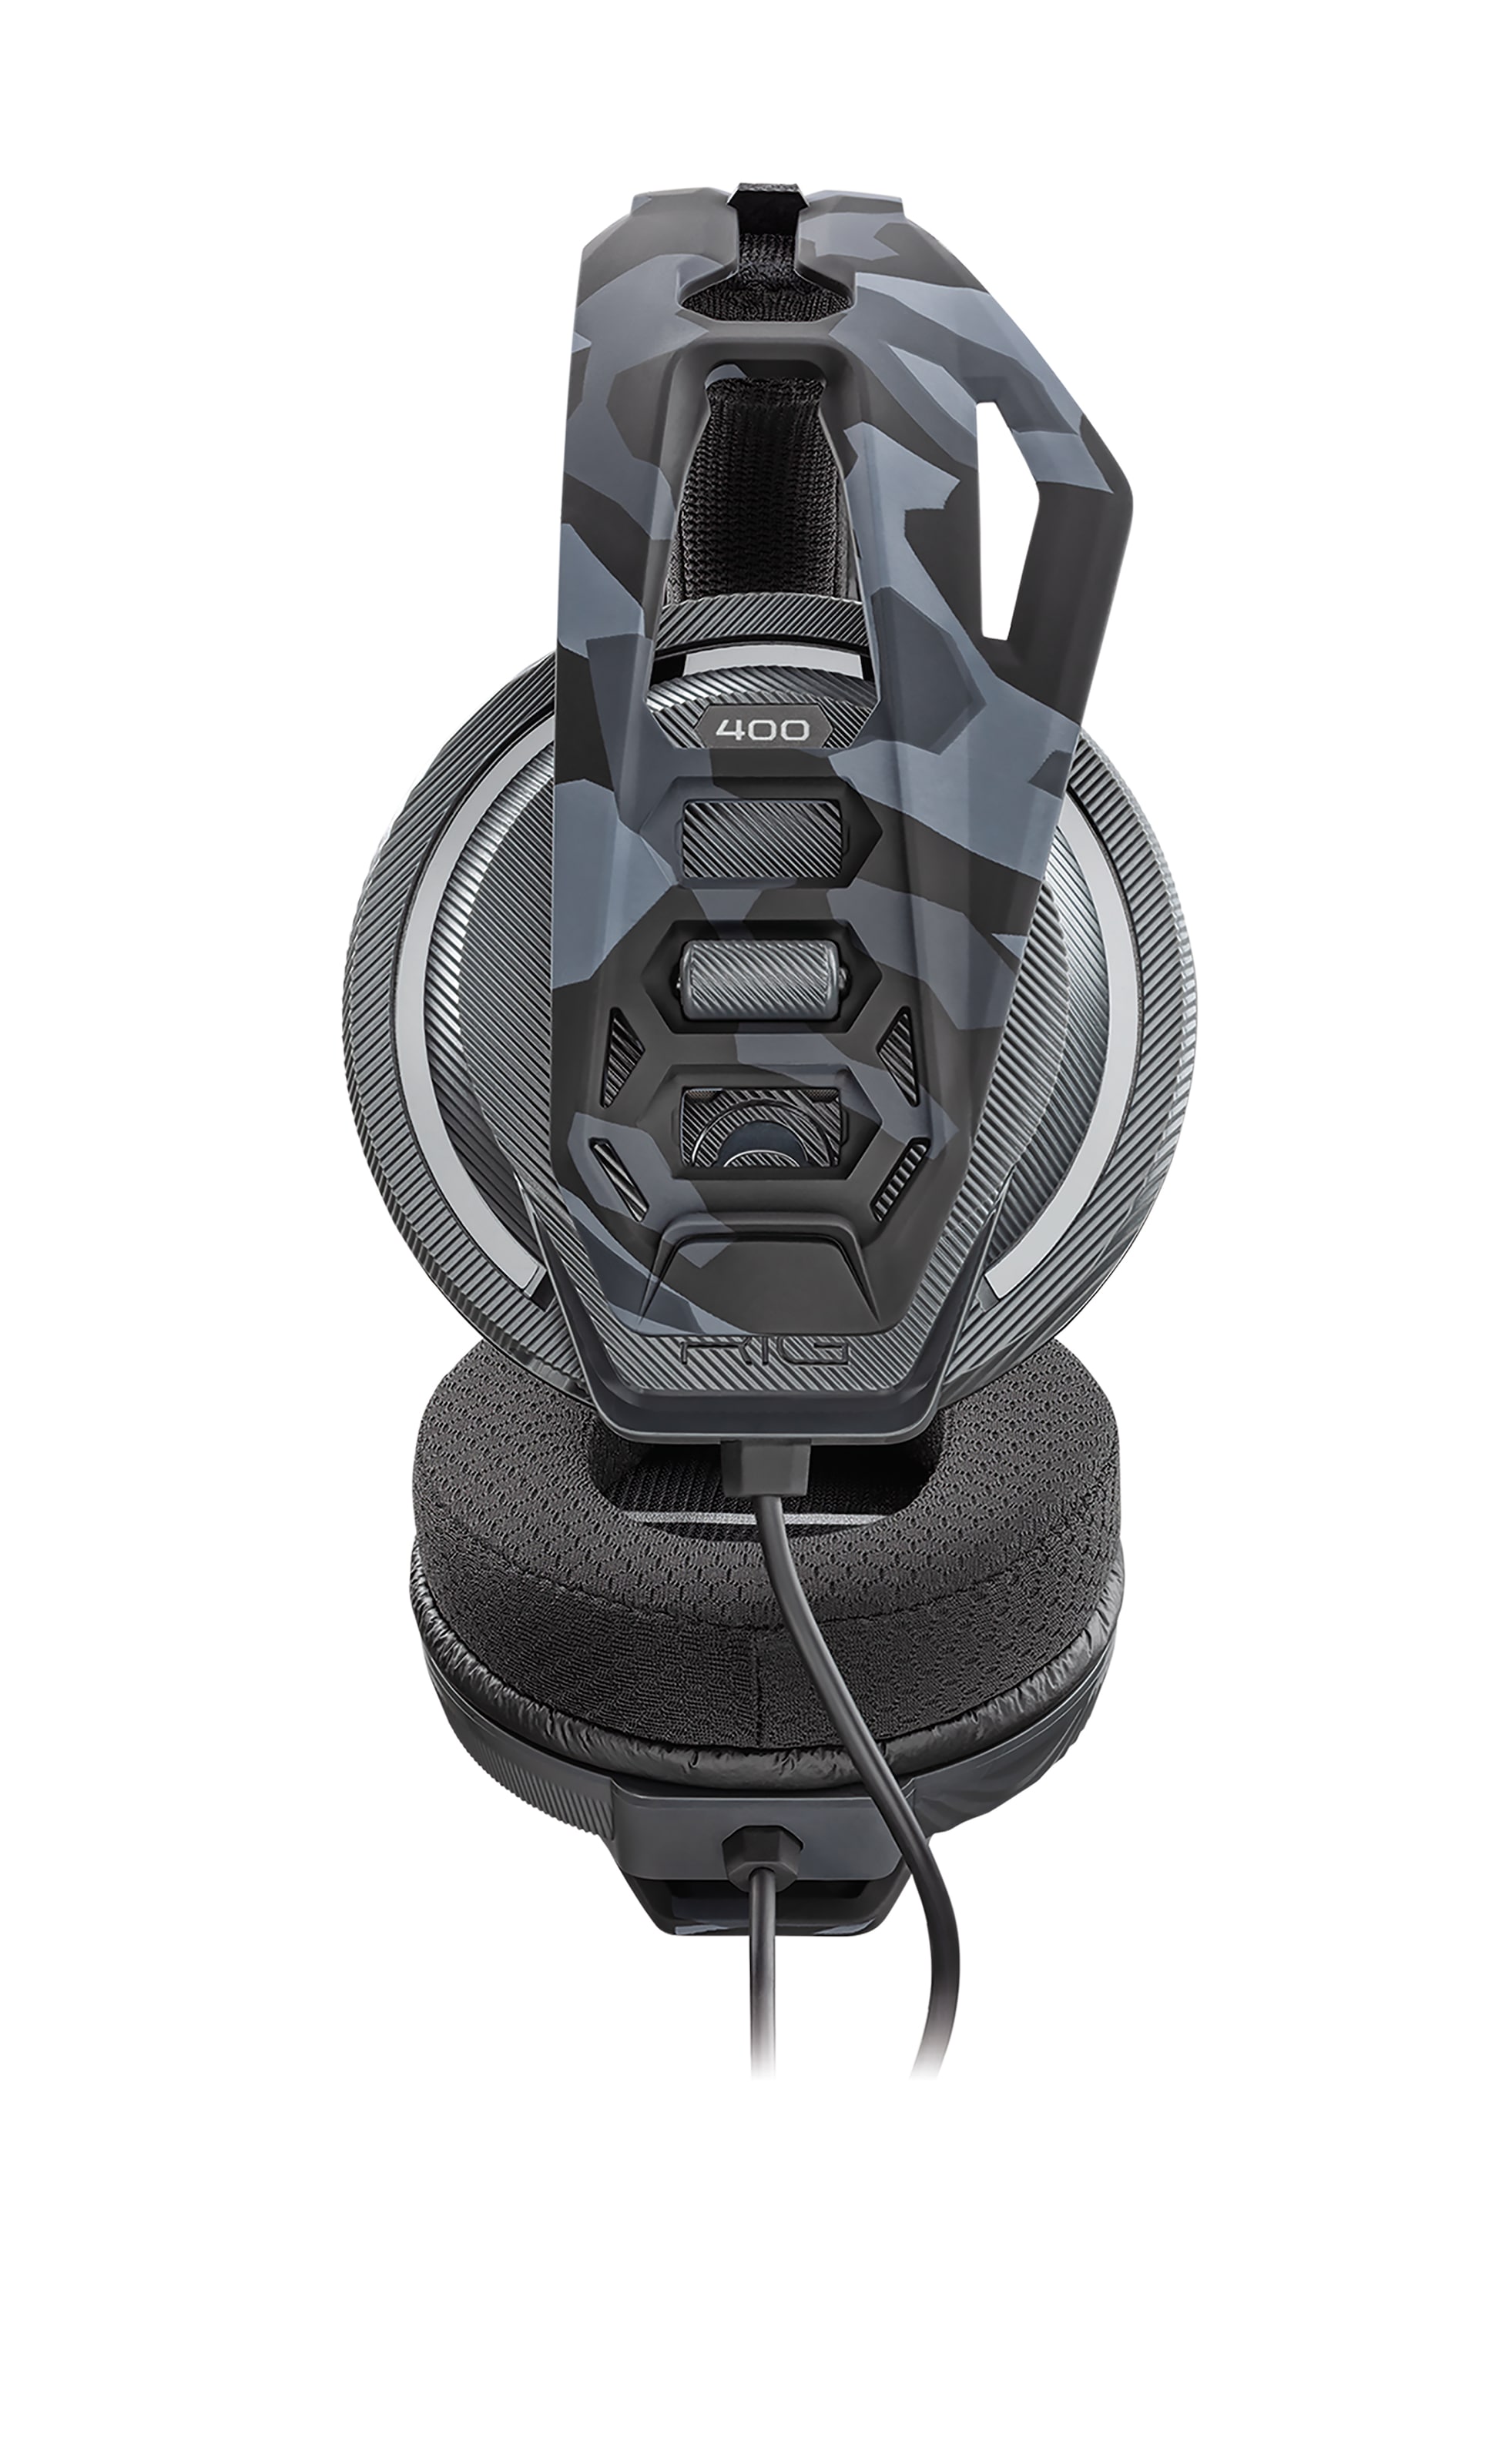 nacon Gaming-Headset »Nacon RIG 400HX Urban-Camo-schwarz, 3,5 mm Klinke«, Mikrofon abnehmbar, kabelgebunden, Stereo, Over Ear, PC, Xbox one